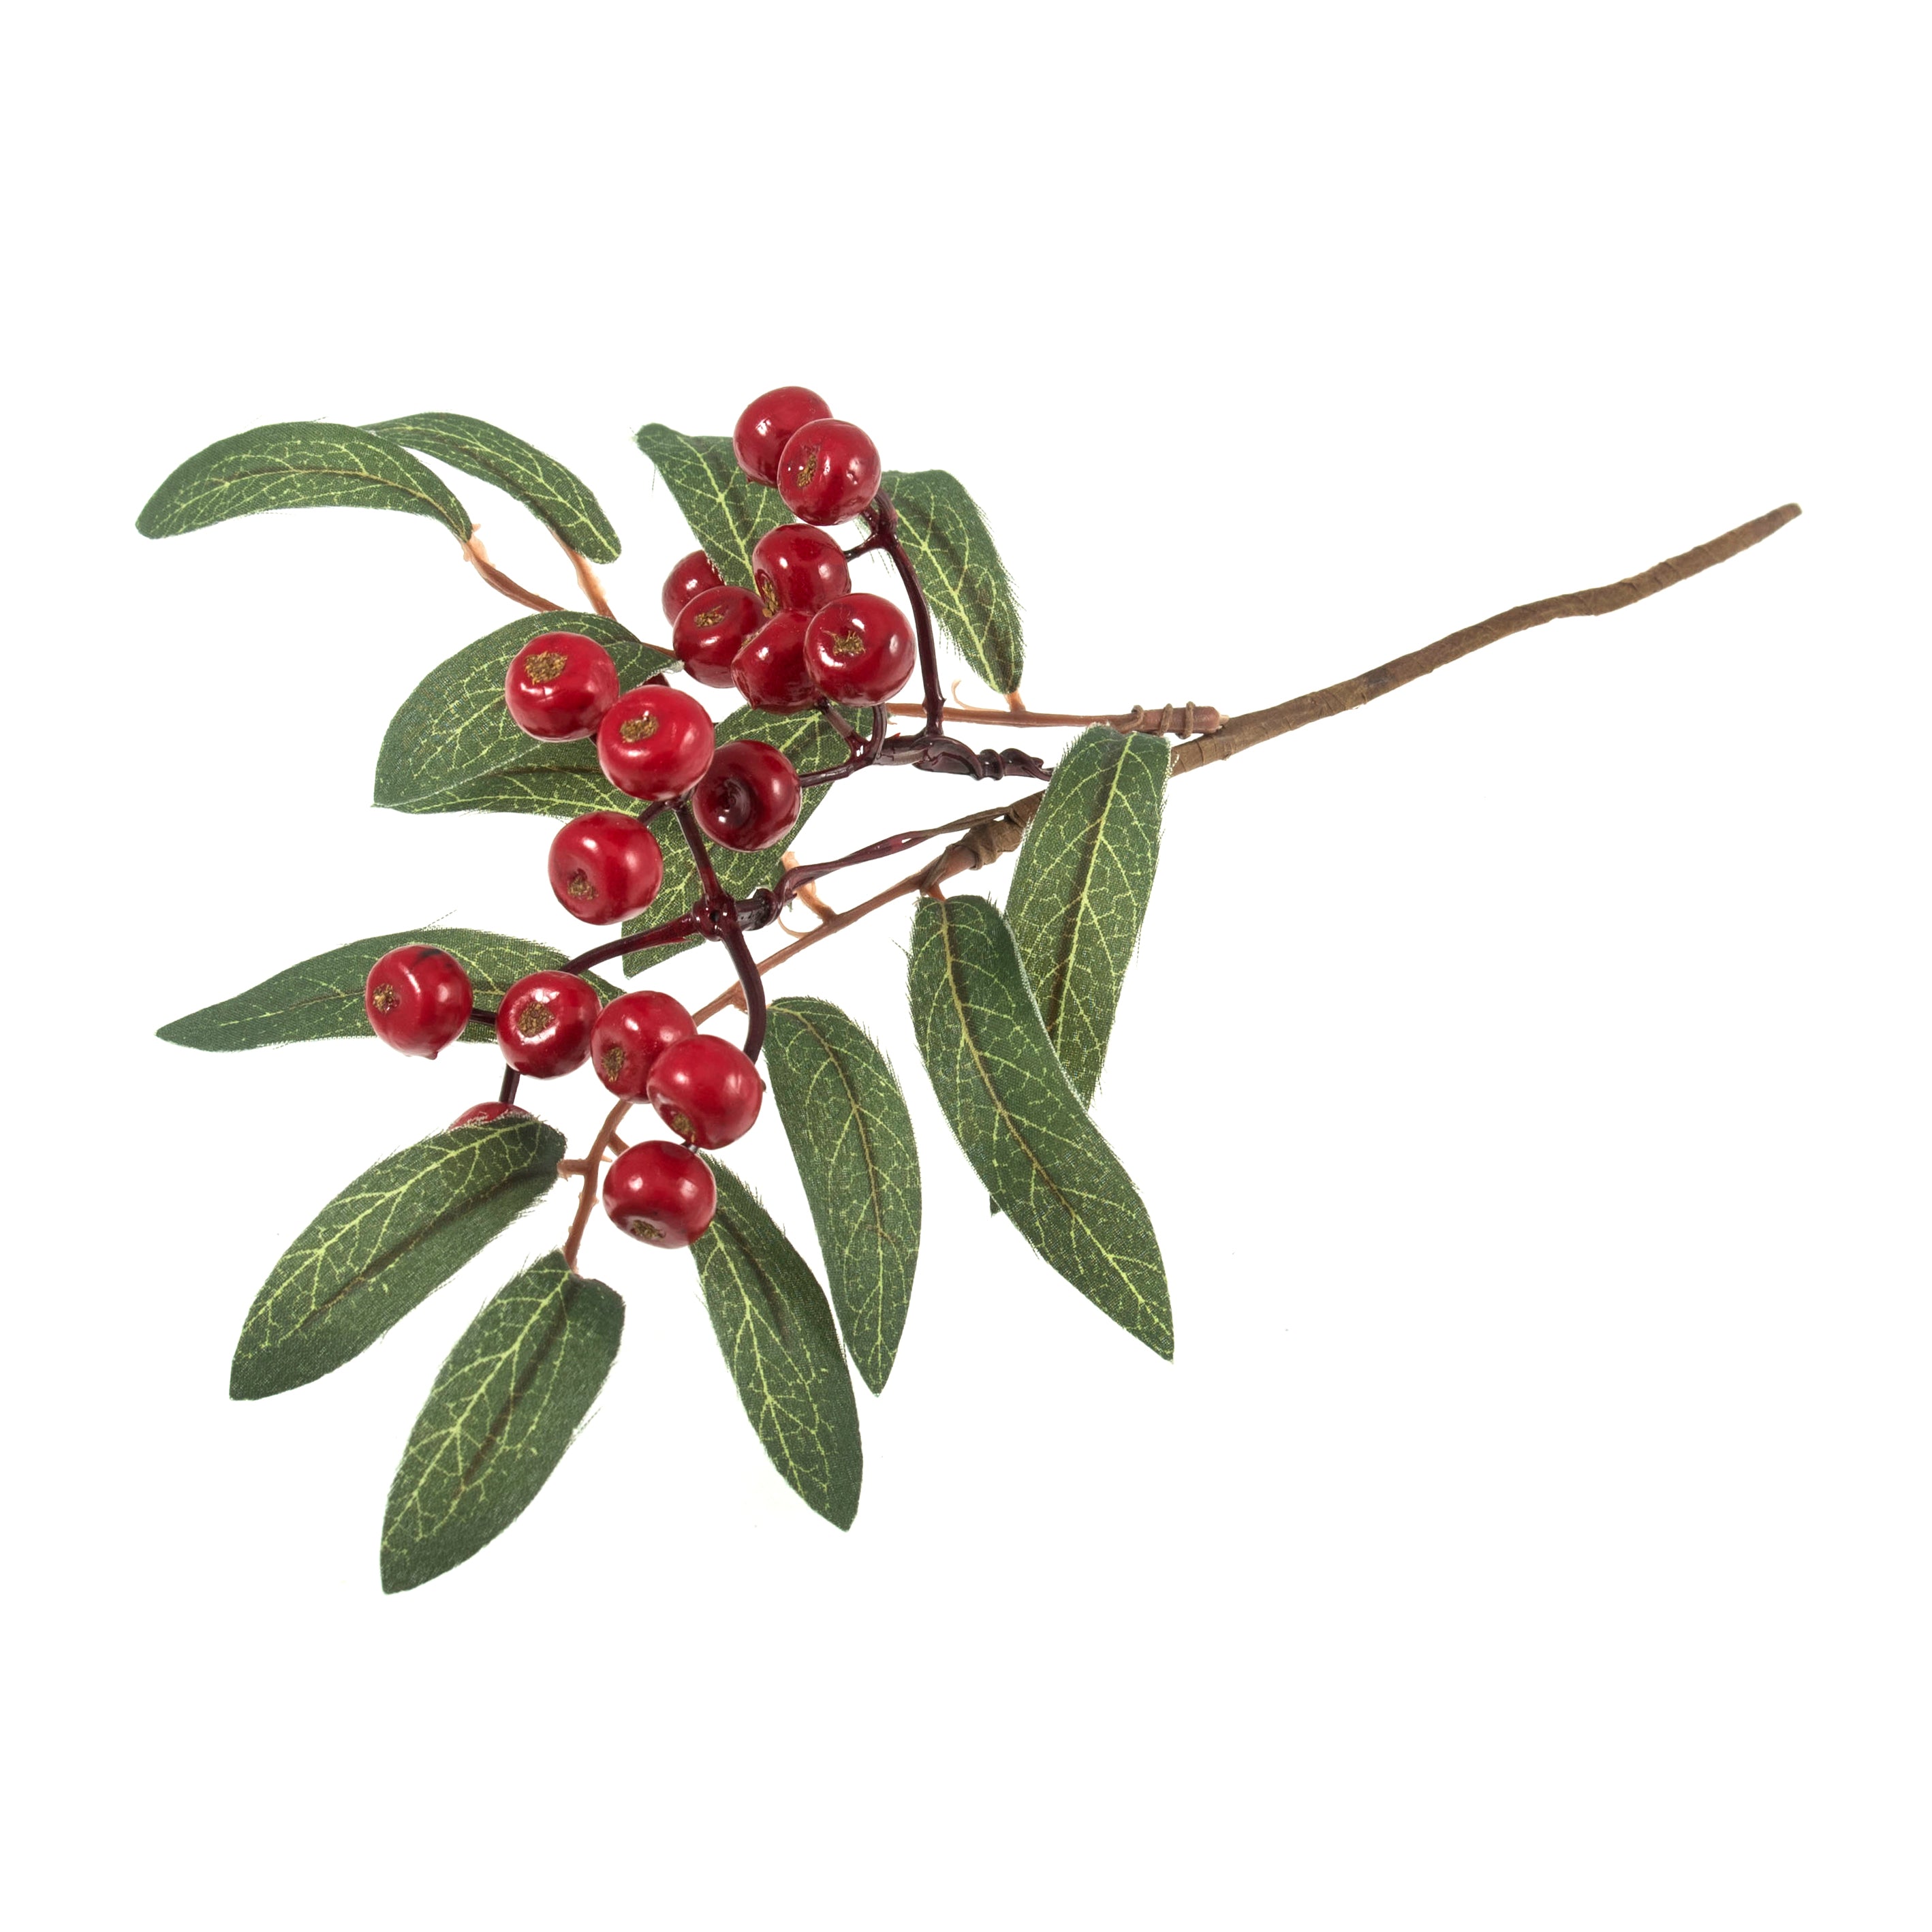 Huckleberry Branch: 25cm